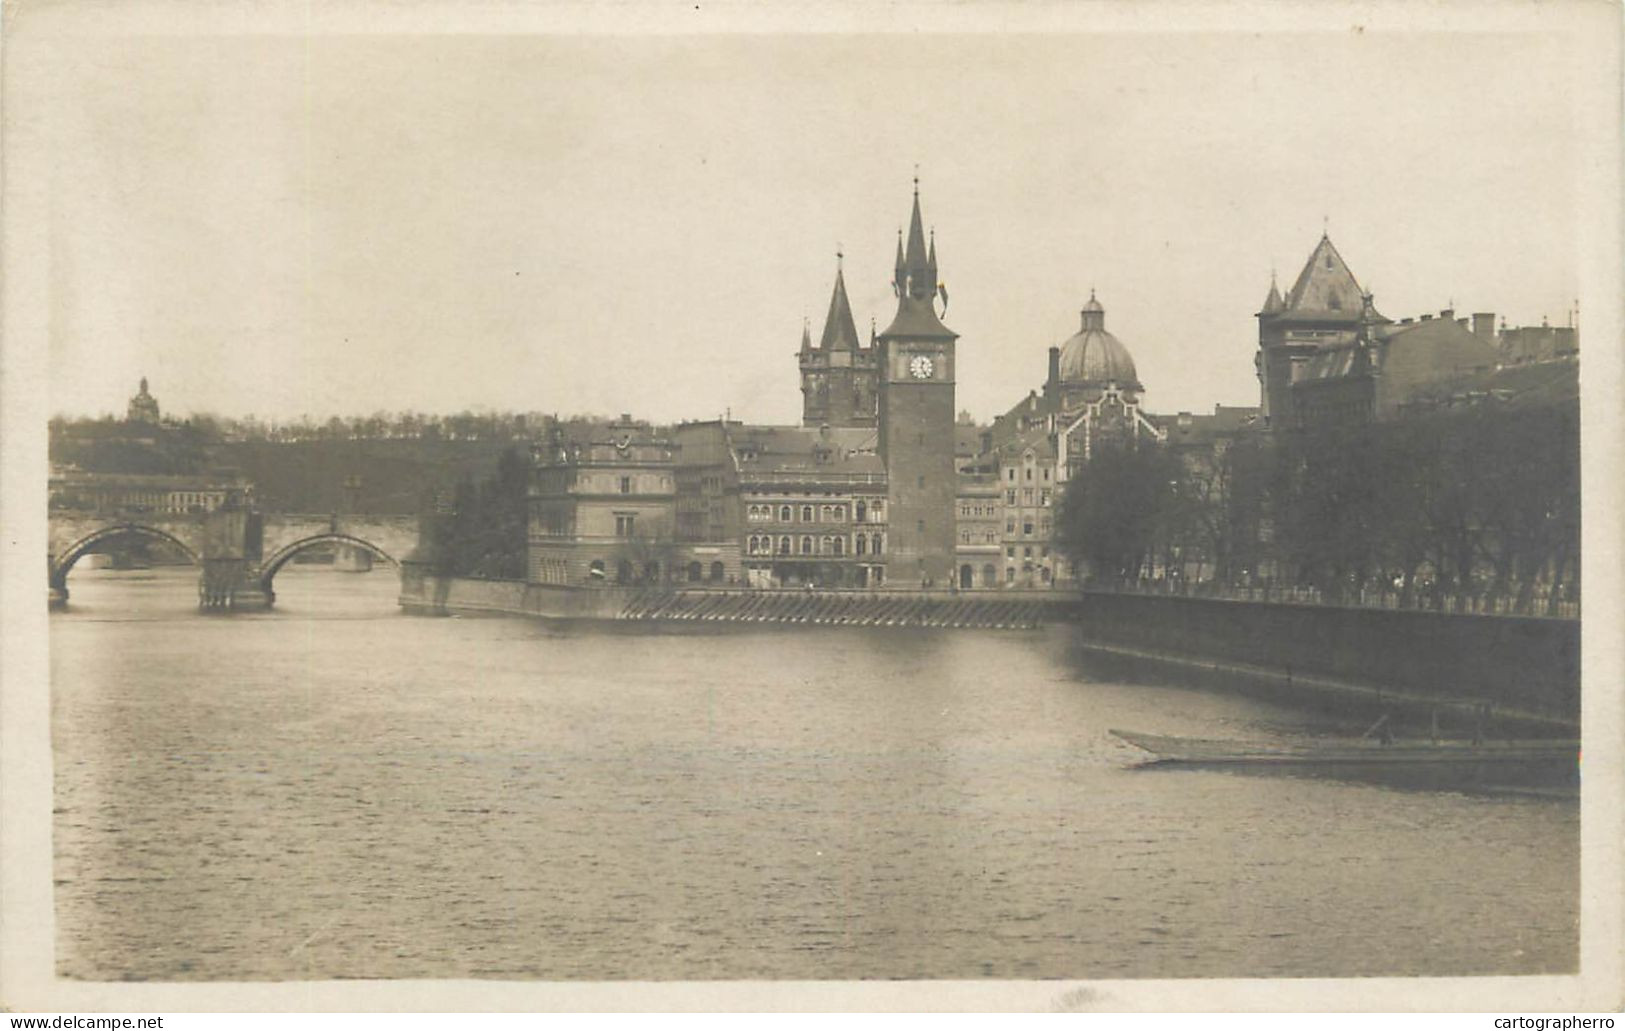 Postcard Czech Republic Prague Bridge Clocktower - Tchéquie